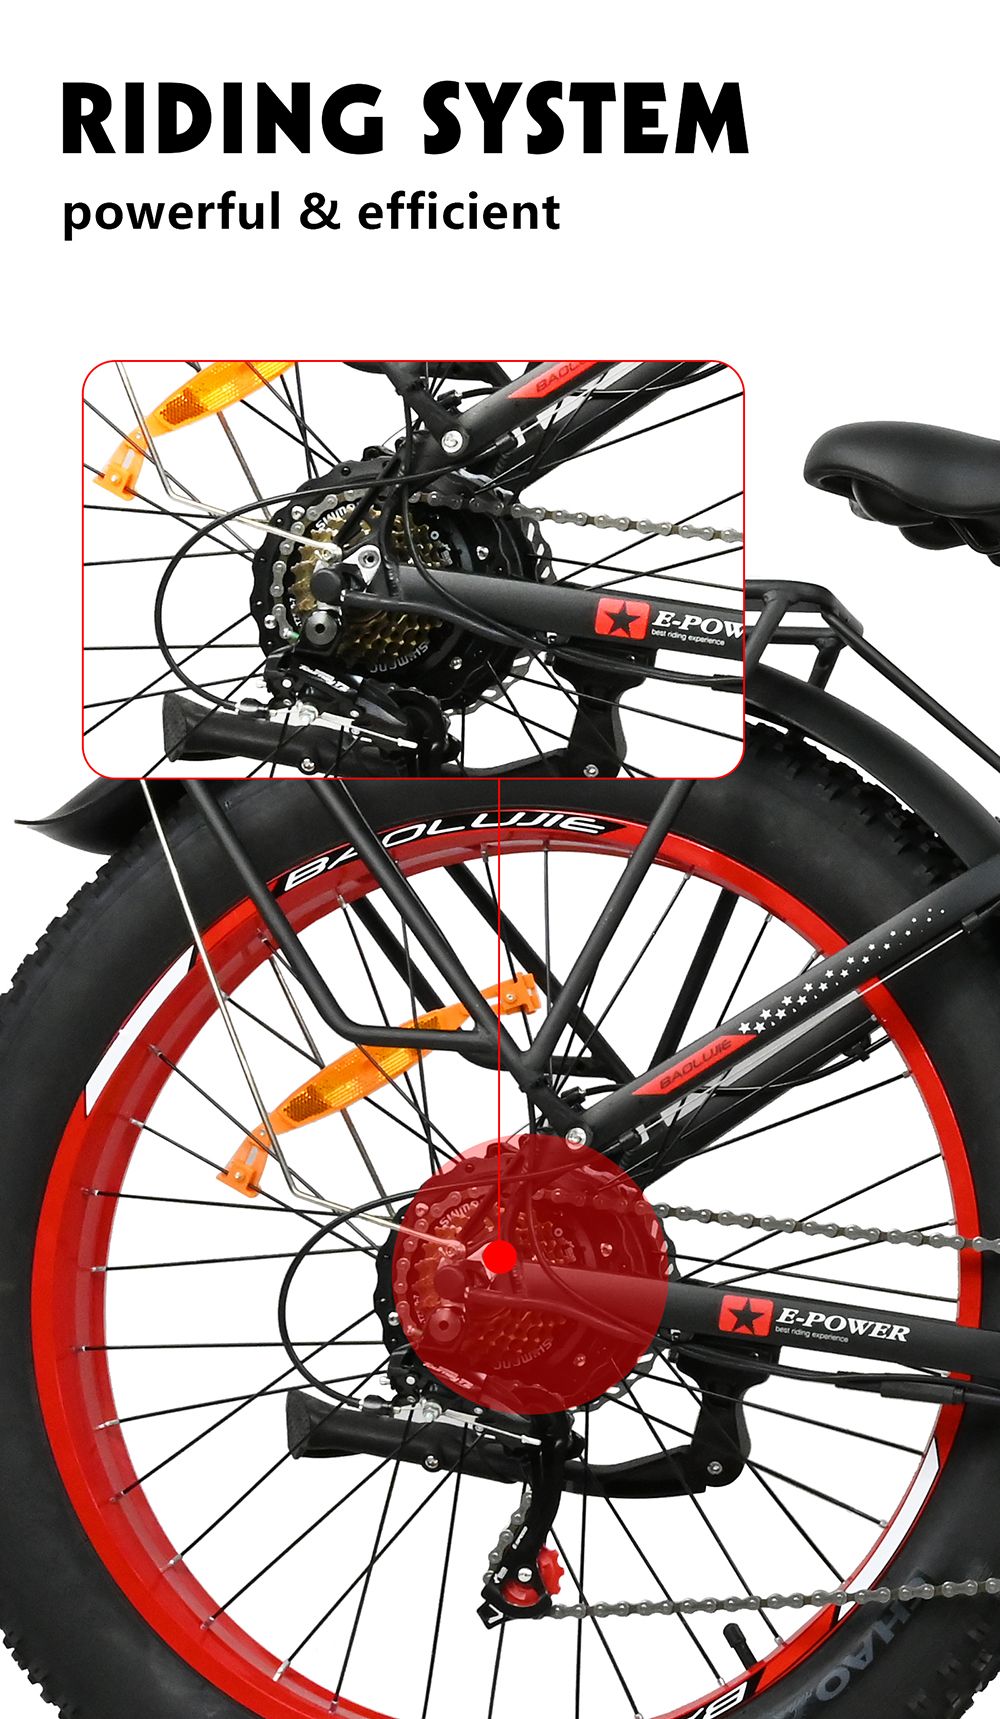 BAOLUJIE DP2619 elektrische fiets, 26 * 4.0 inch dikke band 750 W motor 48 V 13 Ah batterij 45 km / u maximale snelheid 45 km maximaal bereik SHIMANO 7-speed LCD-display - zwart